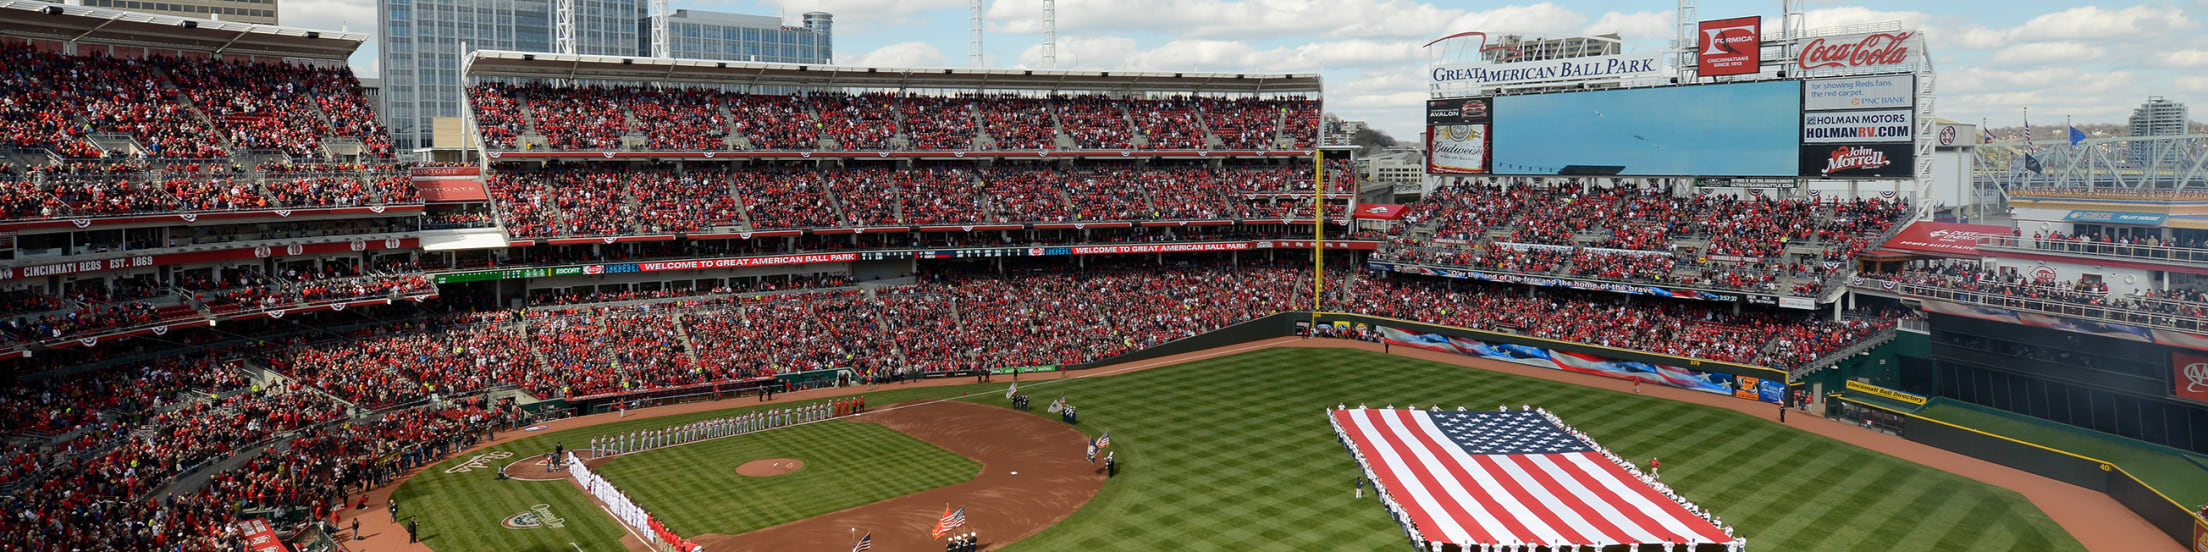 Great American Ball Park, Cincinnati Reds stadium - Ballparks of Baseball